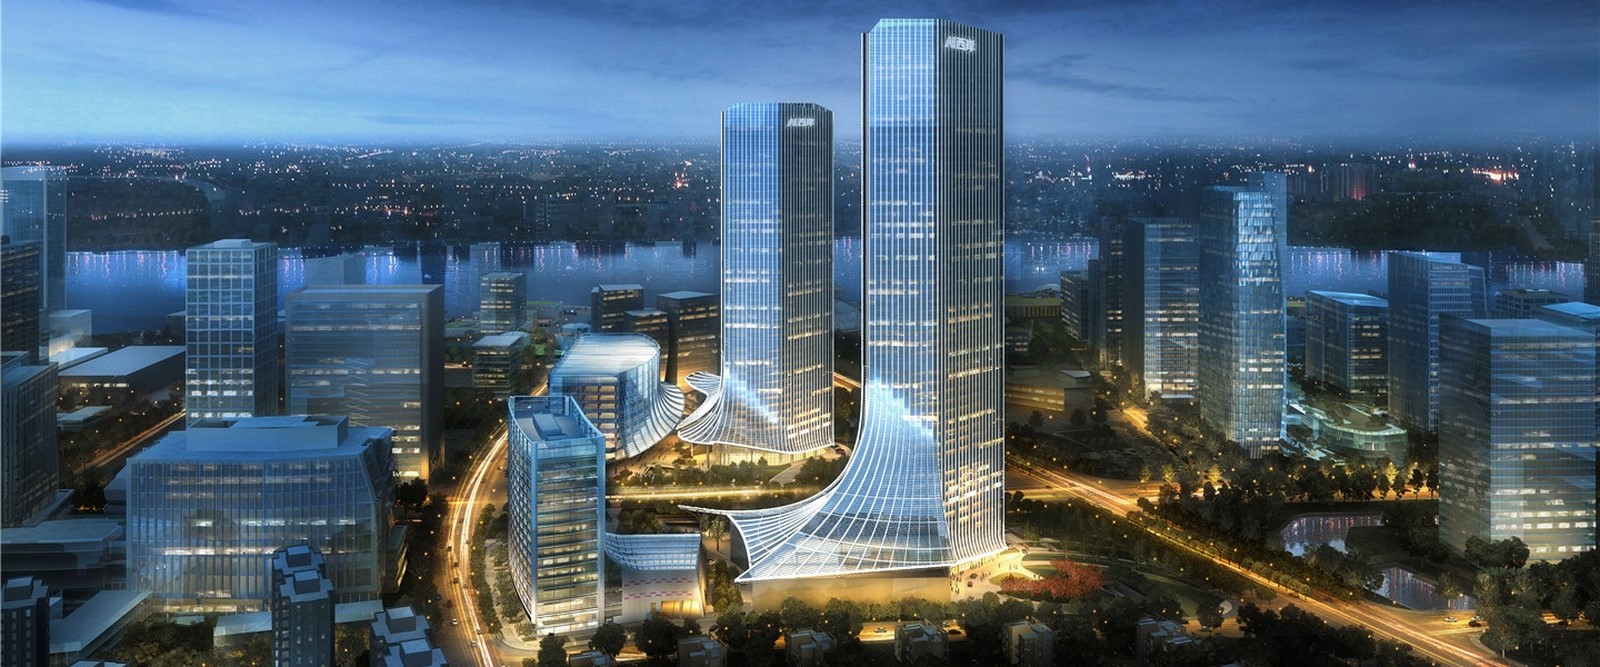 Shanghai West Bund International AI Tower and Plaza by Nikken Sekkei - Sheet1